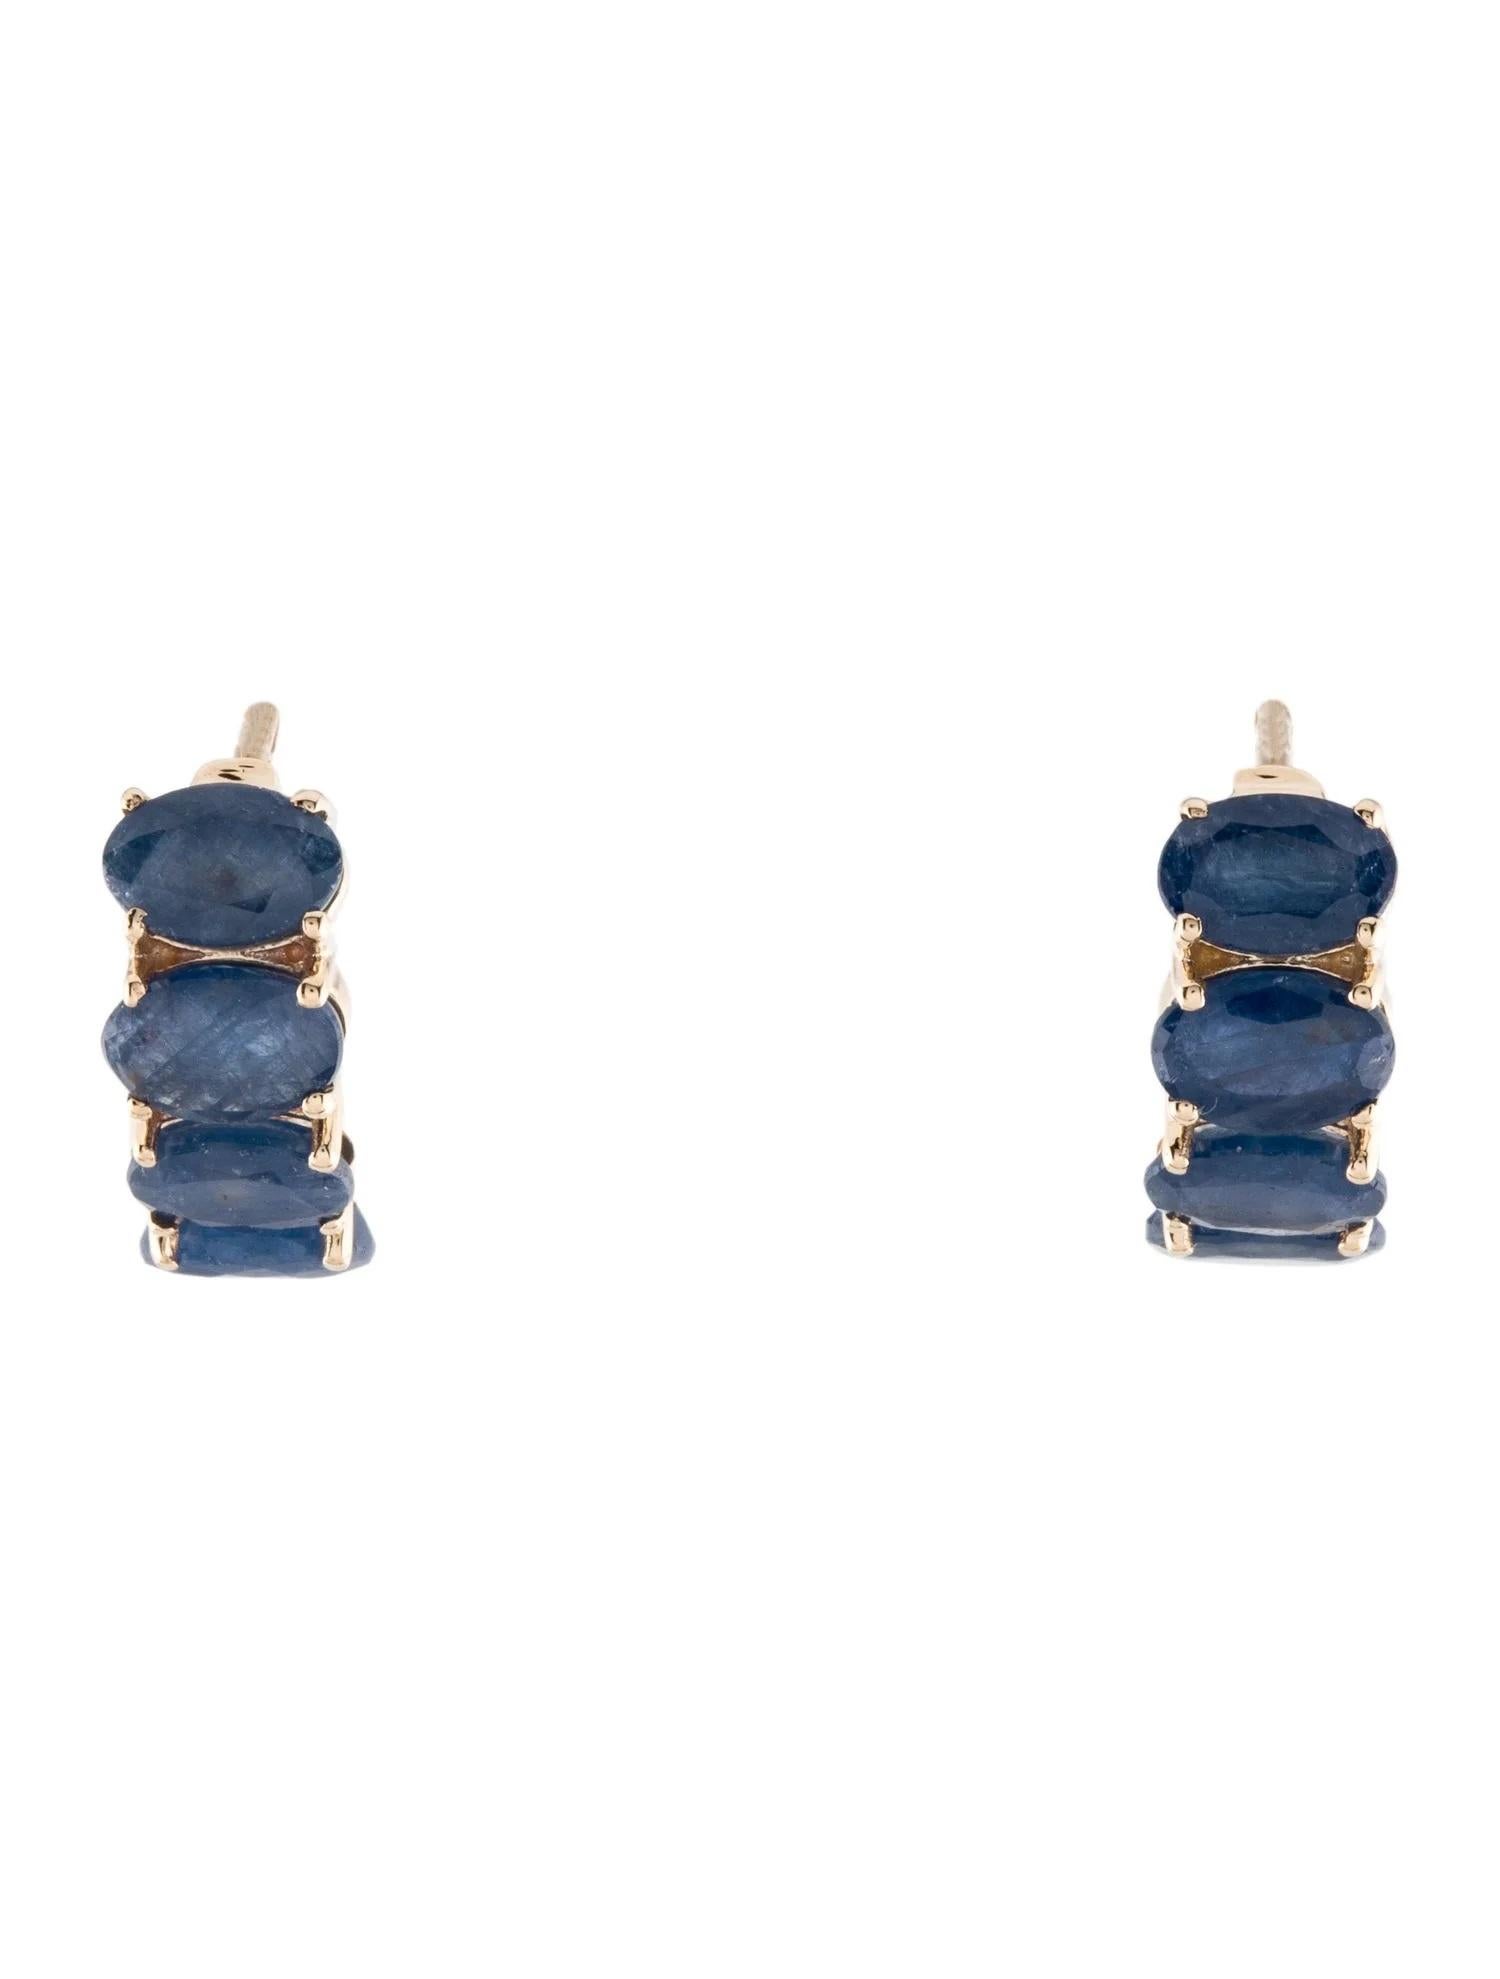 Oval Cut 14K 3.45ctw Sapphire Huggie Earrings - Oval Blue Sapphires For Sale